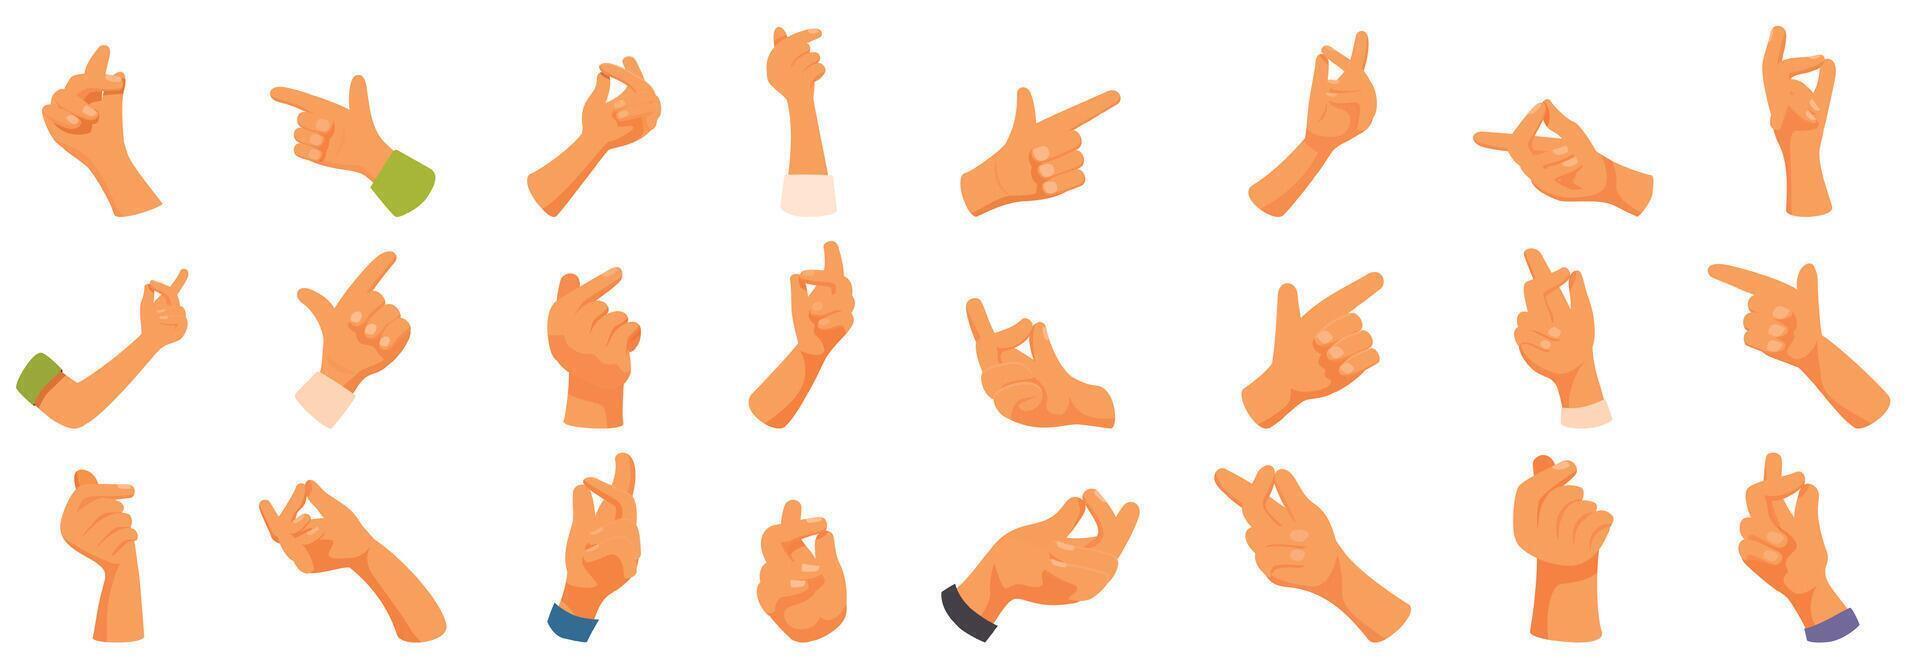 Easy finger icons set cartoon . Hand gesture vector